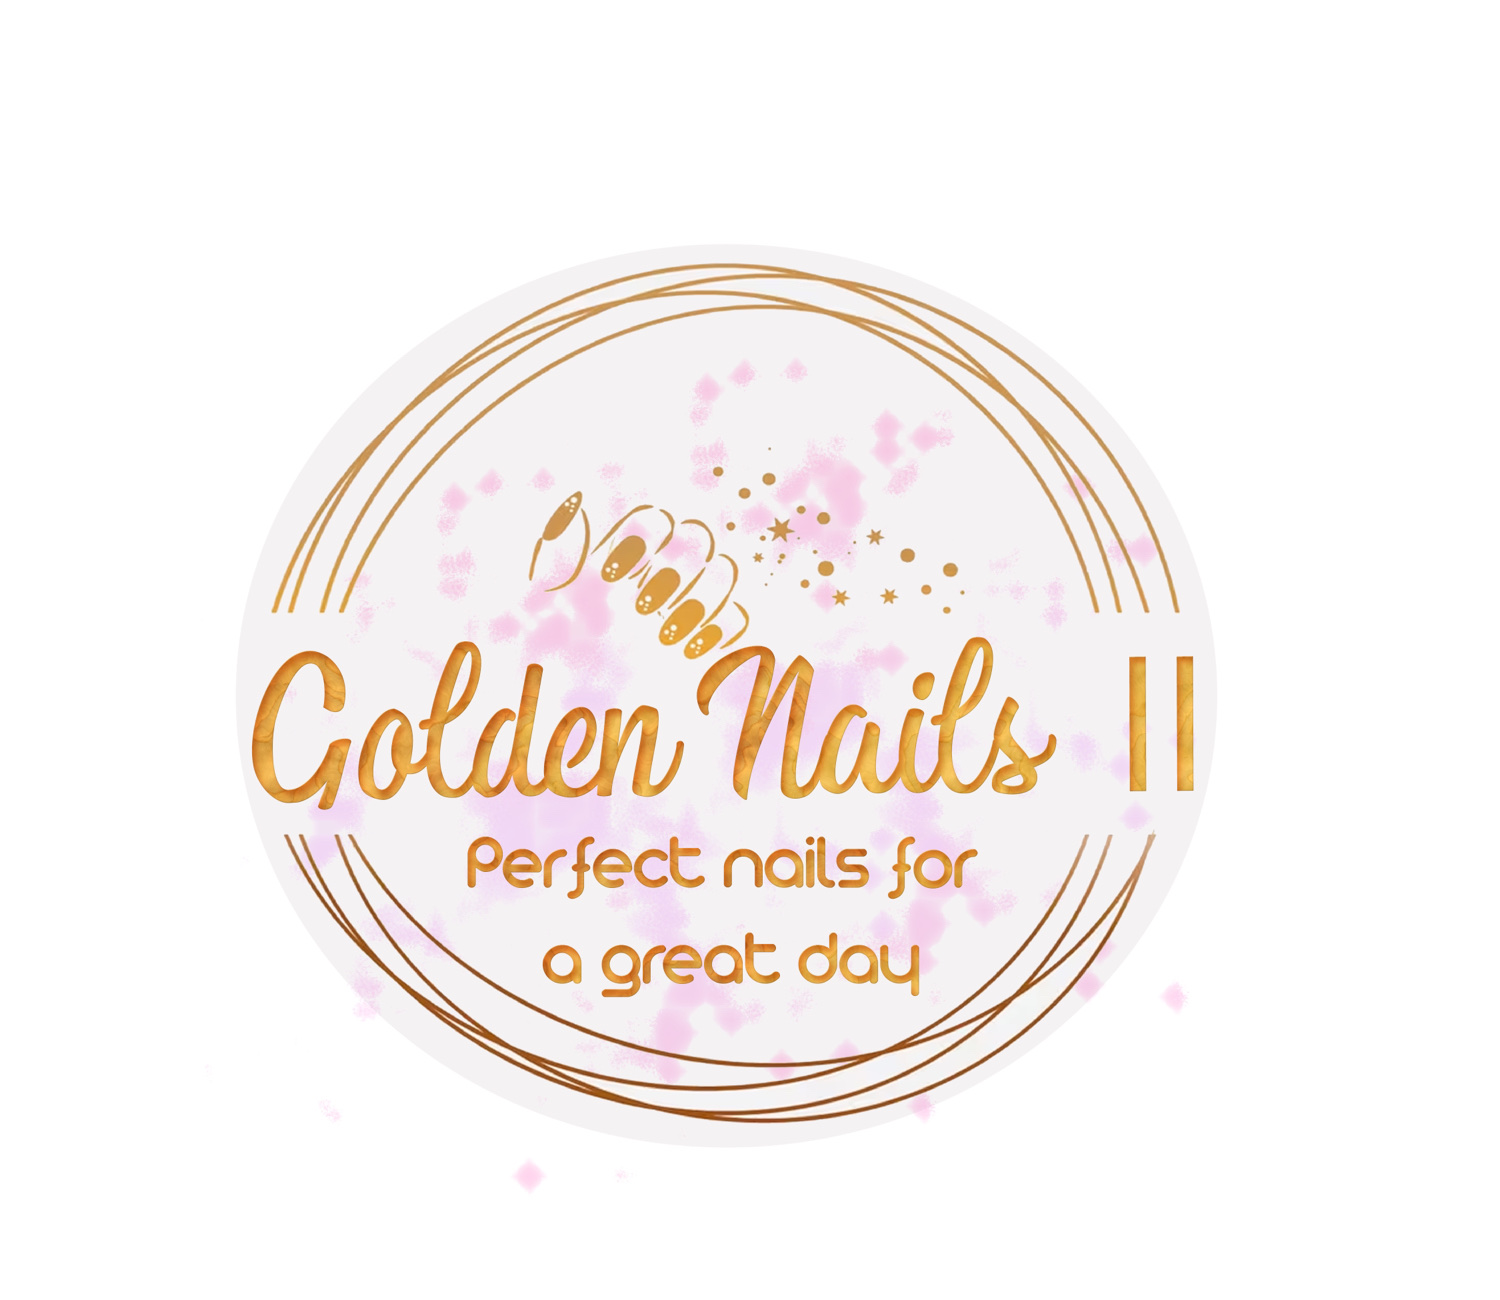 Golden Nails - Nail salon near me Fairfax Station, VA 22039